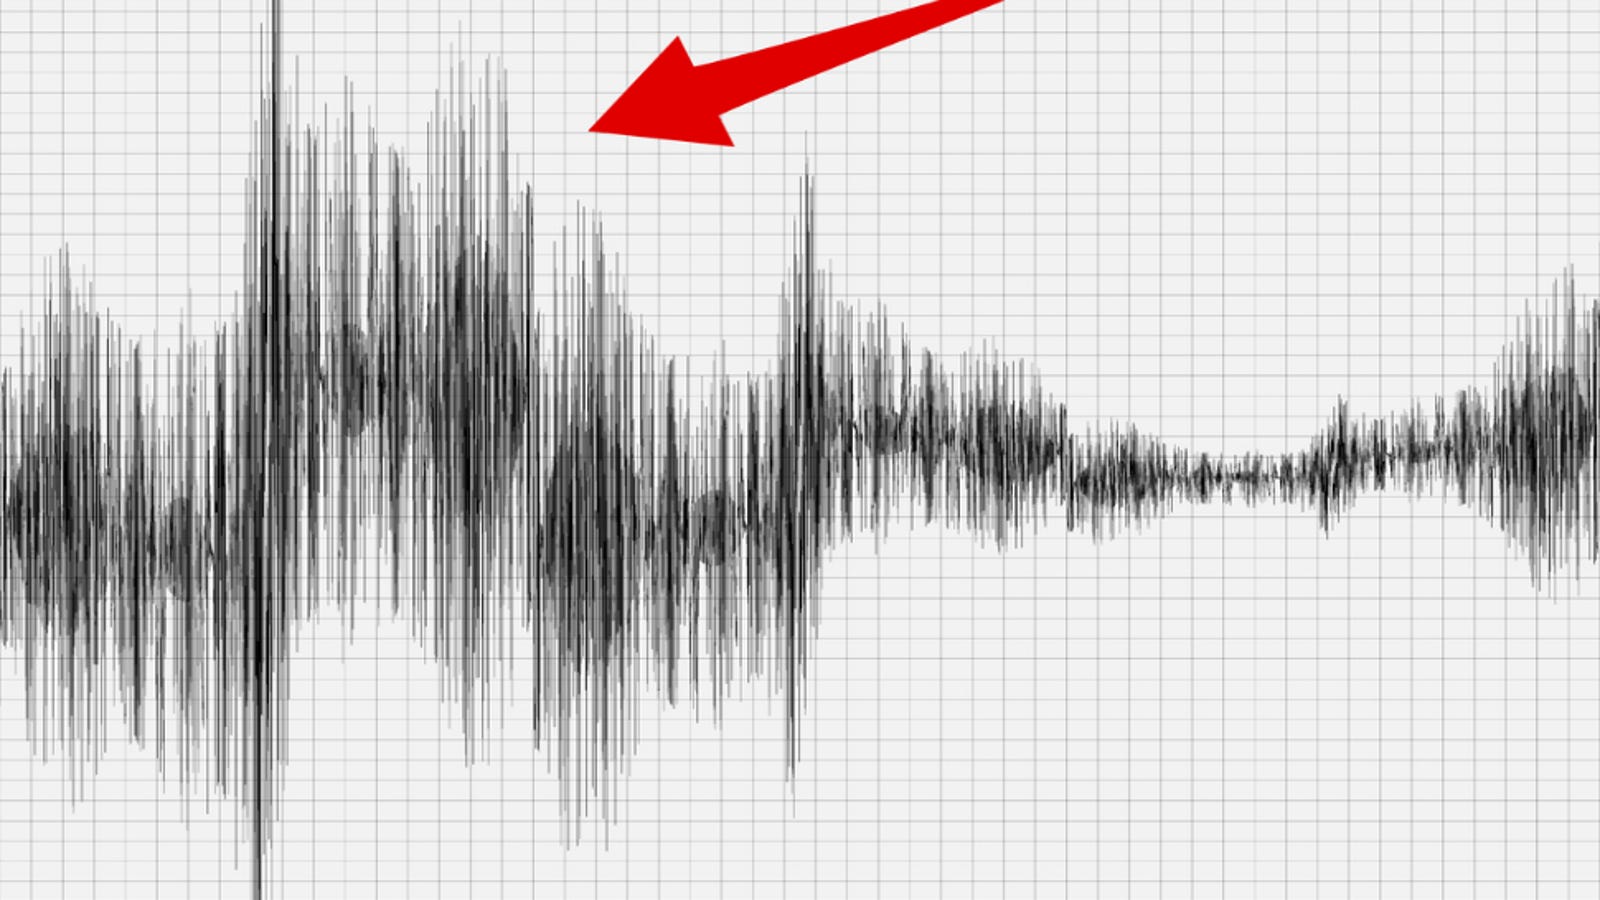 The California-Made Earthquake Alarm That Works But California Won't Build